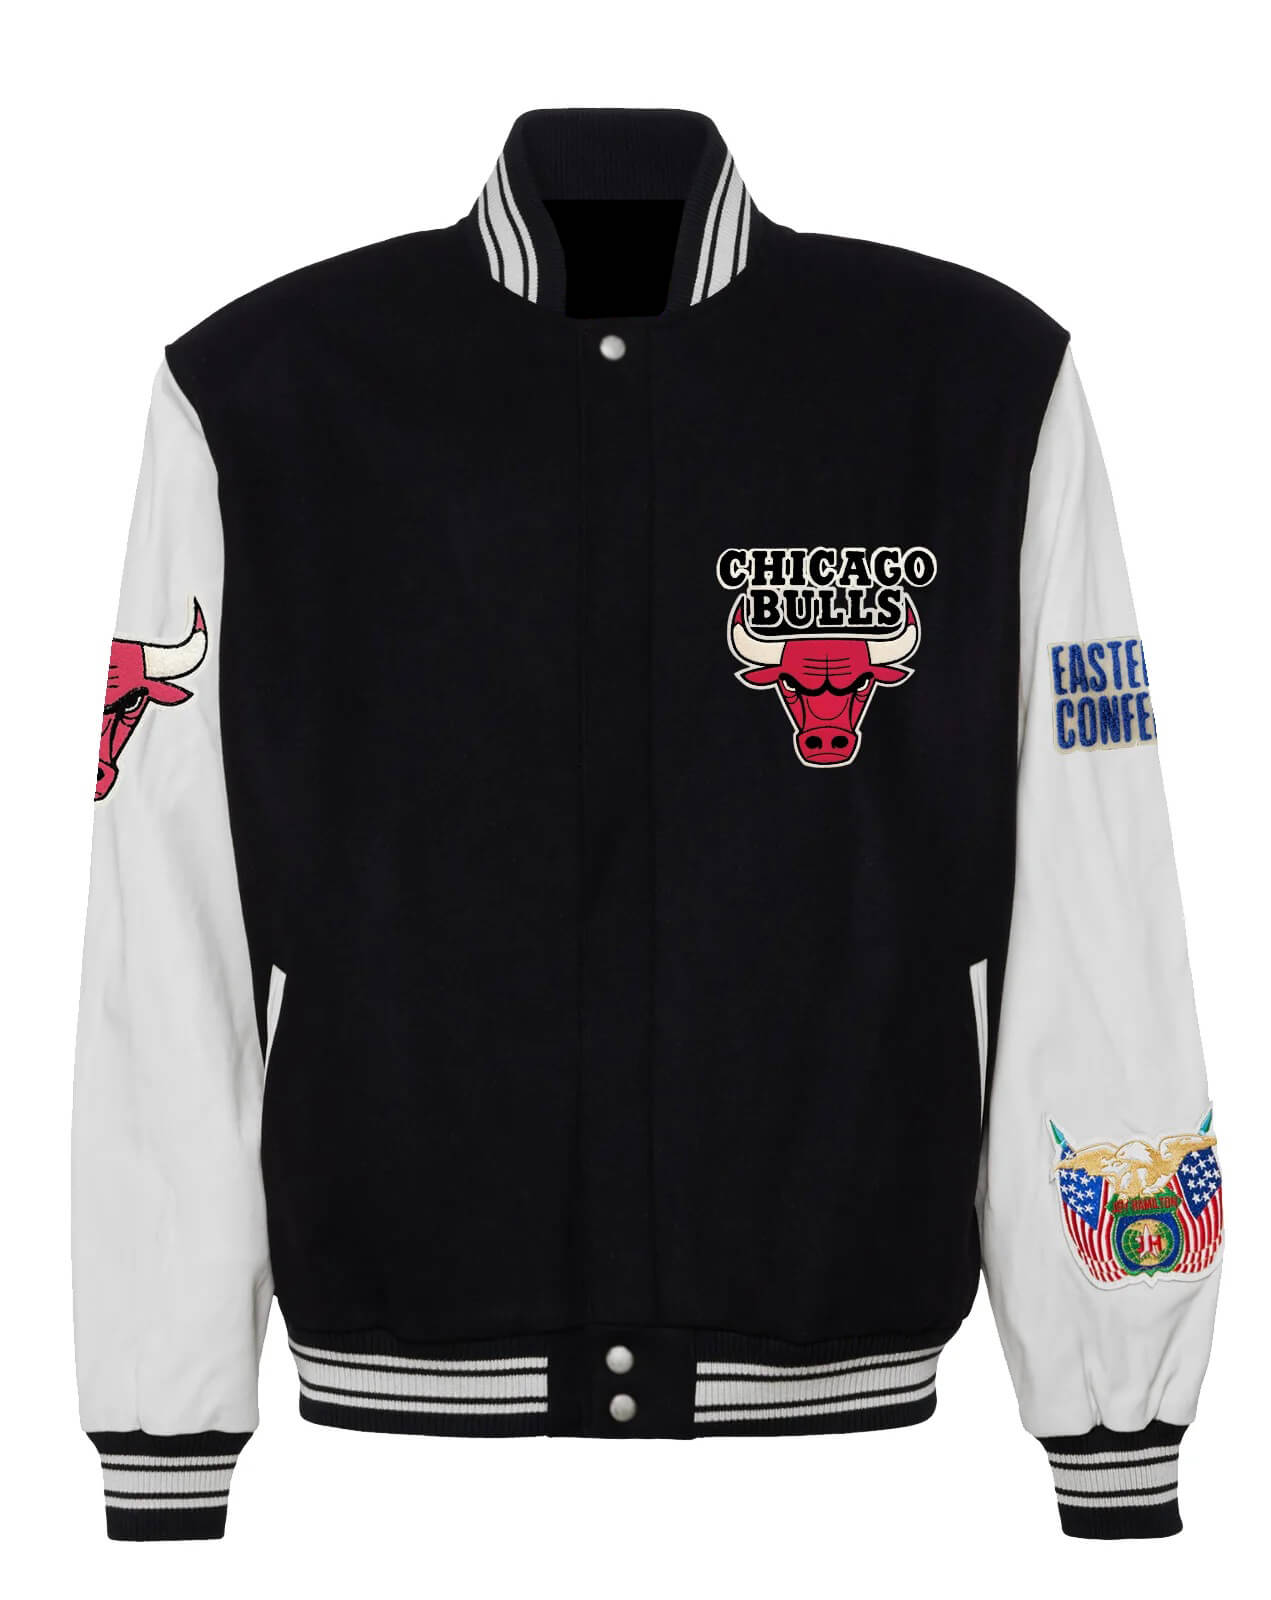 Maker of Jacket NBA Teams Jackets Chicago Bulls Satin Black